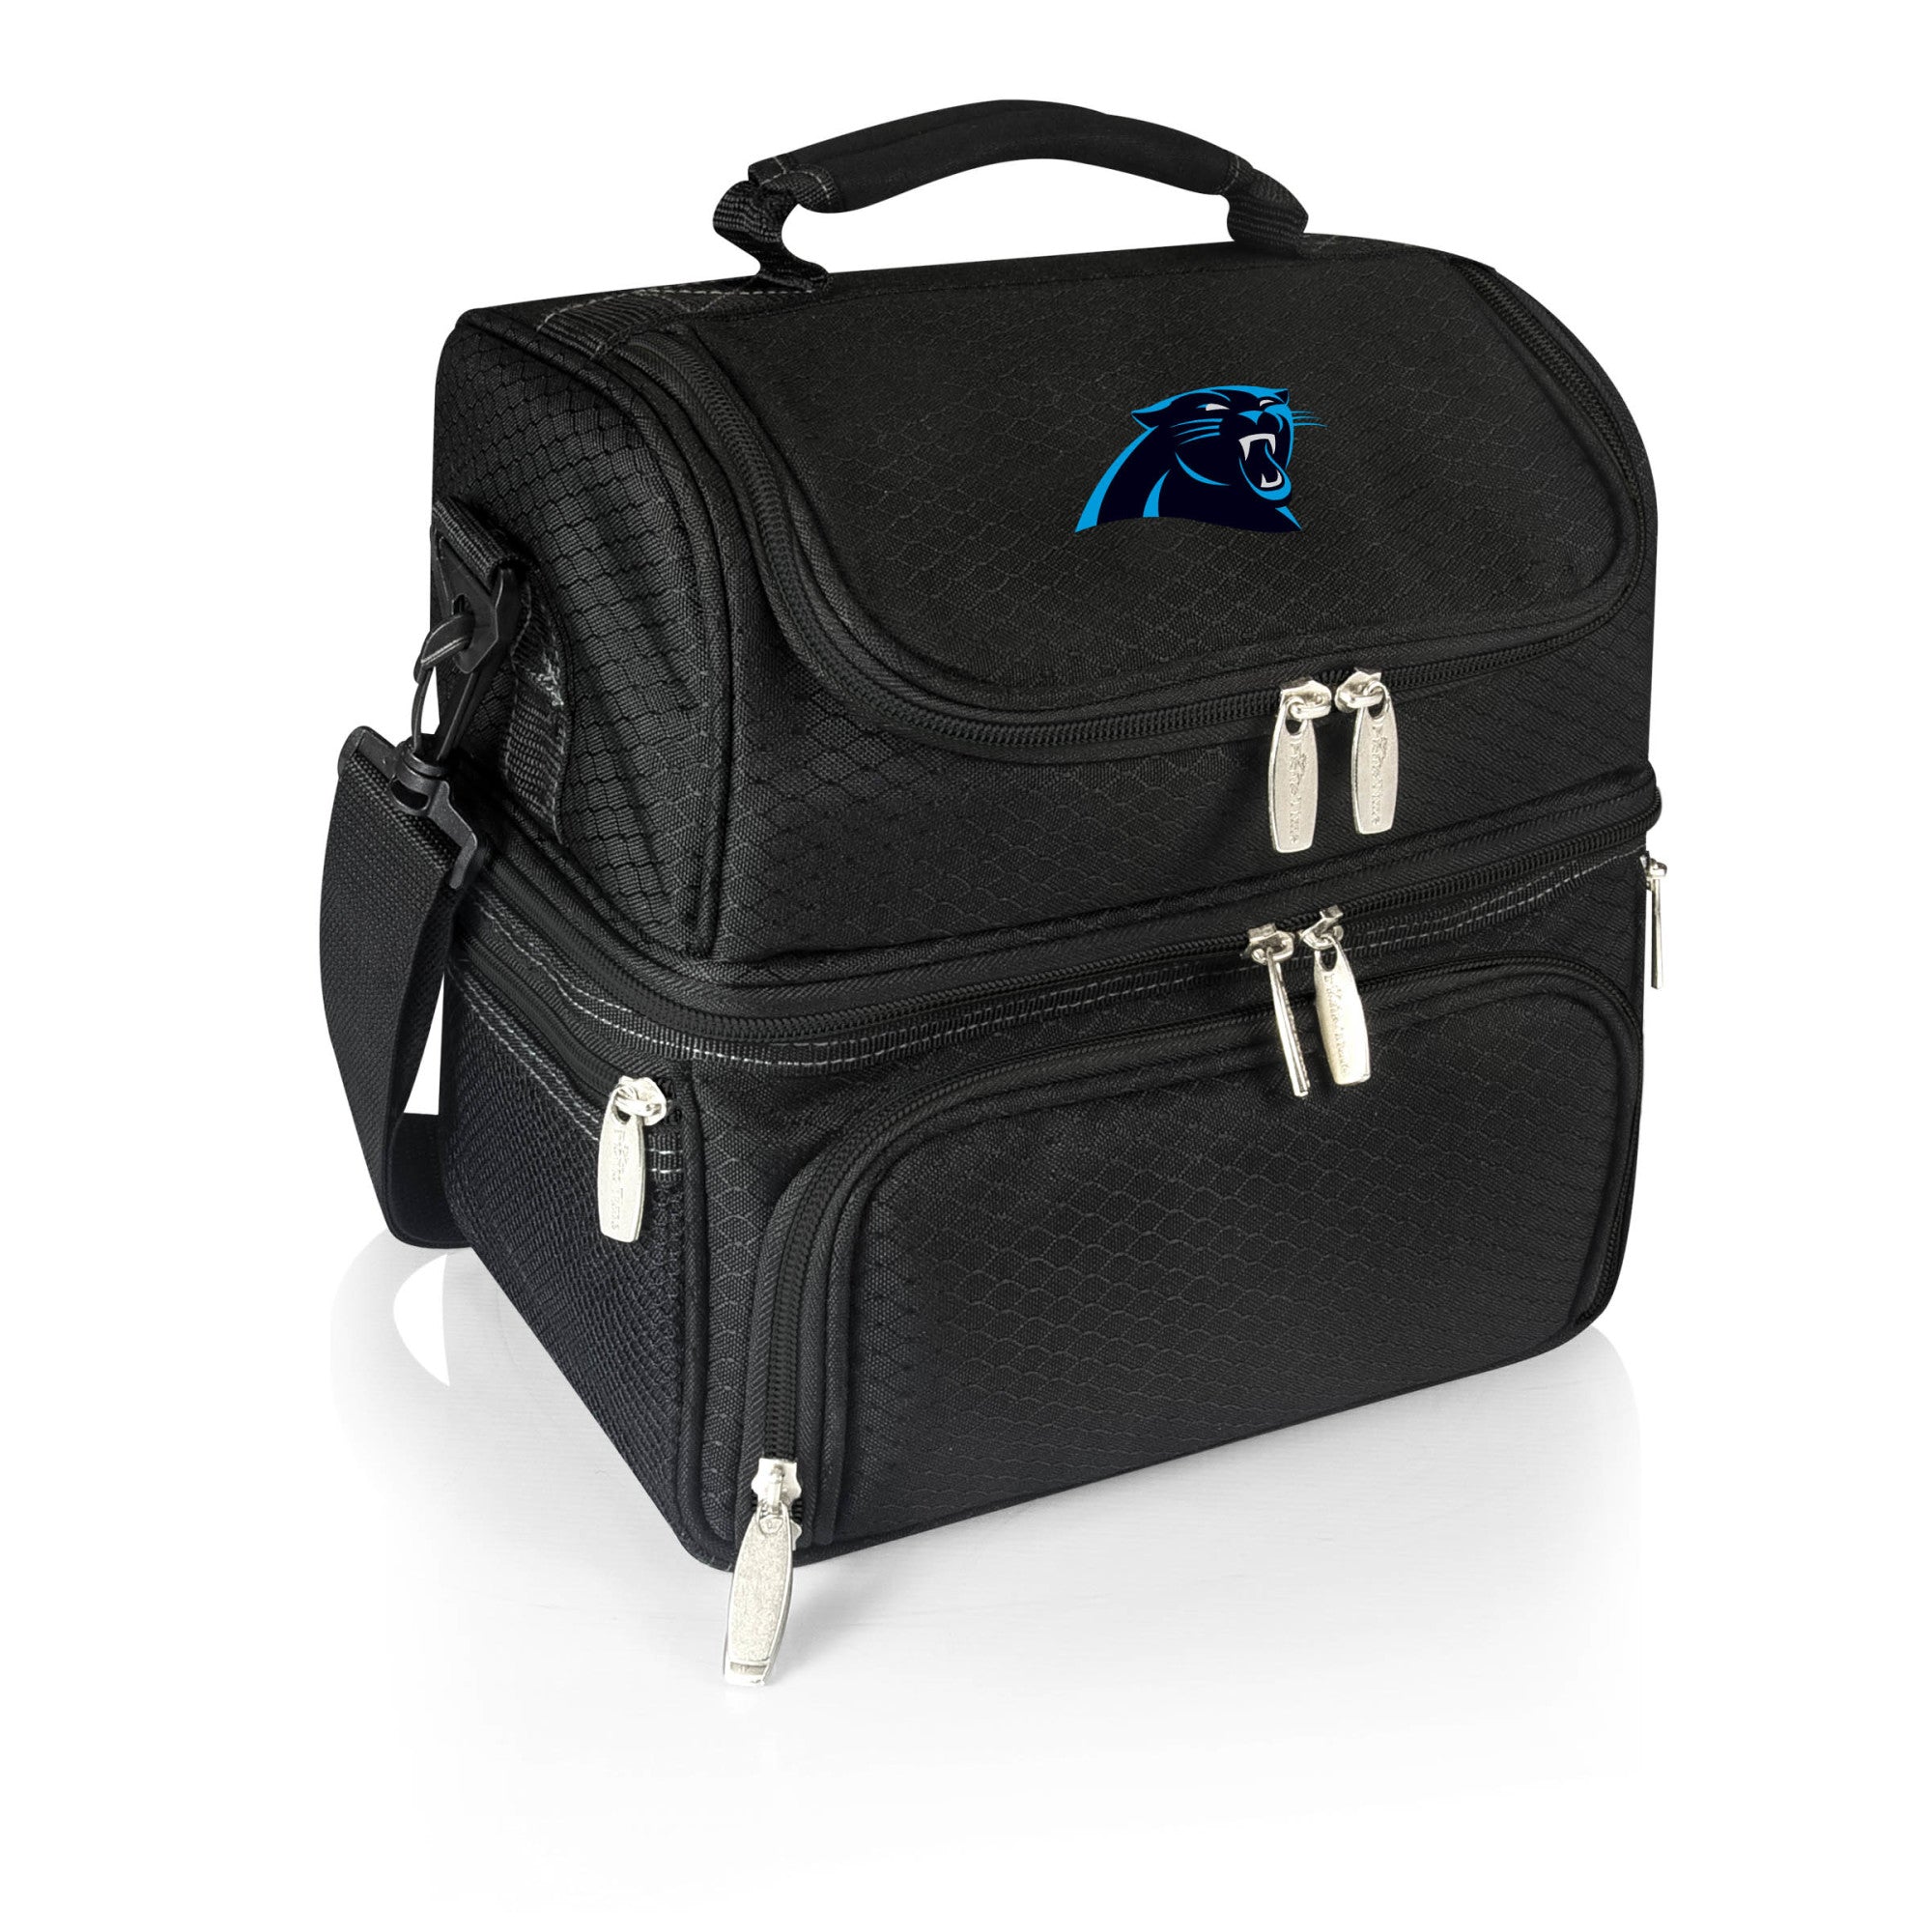 Carolina Panthers - Pranzo Lunch Bag Cooler with Utensils